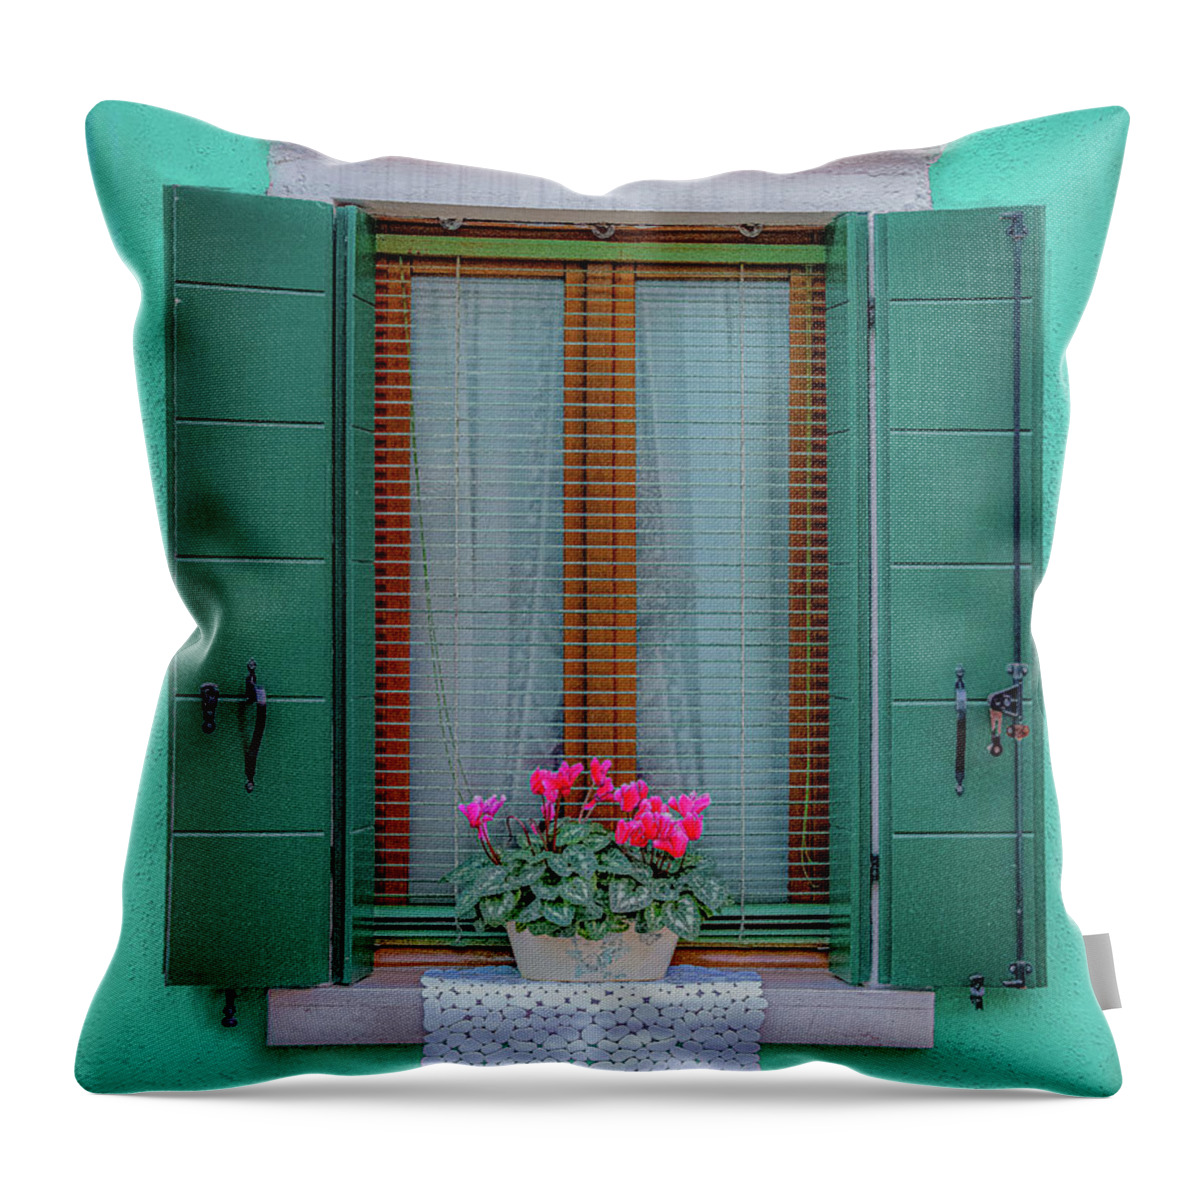 Burano Throw Pillow featuring the photograph Aqua Burano Window by David Downs